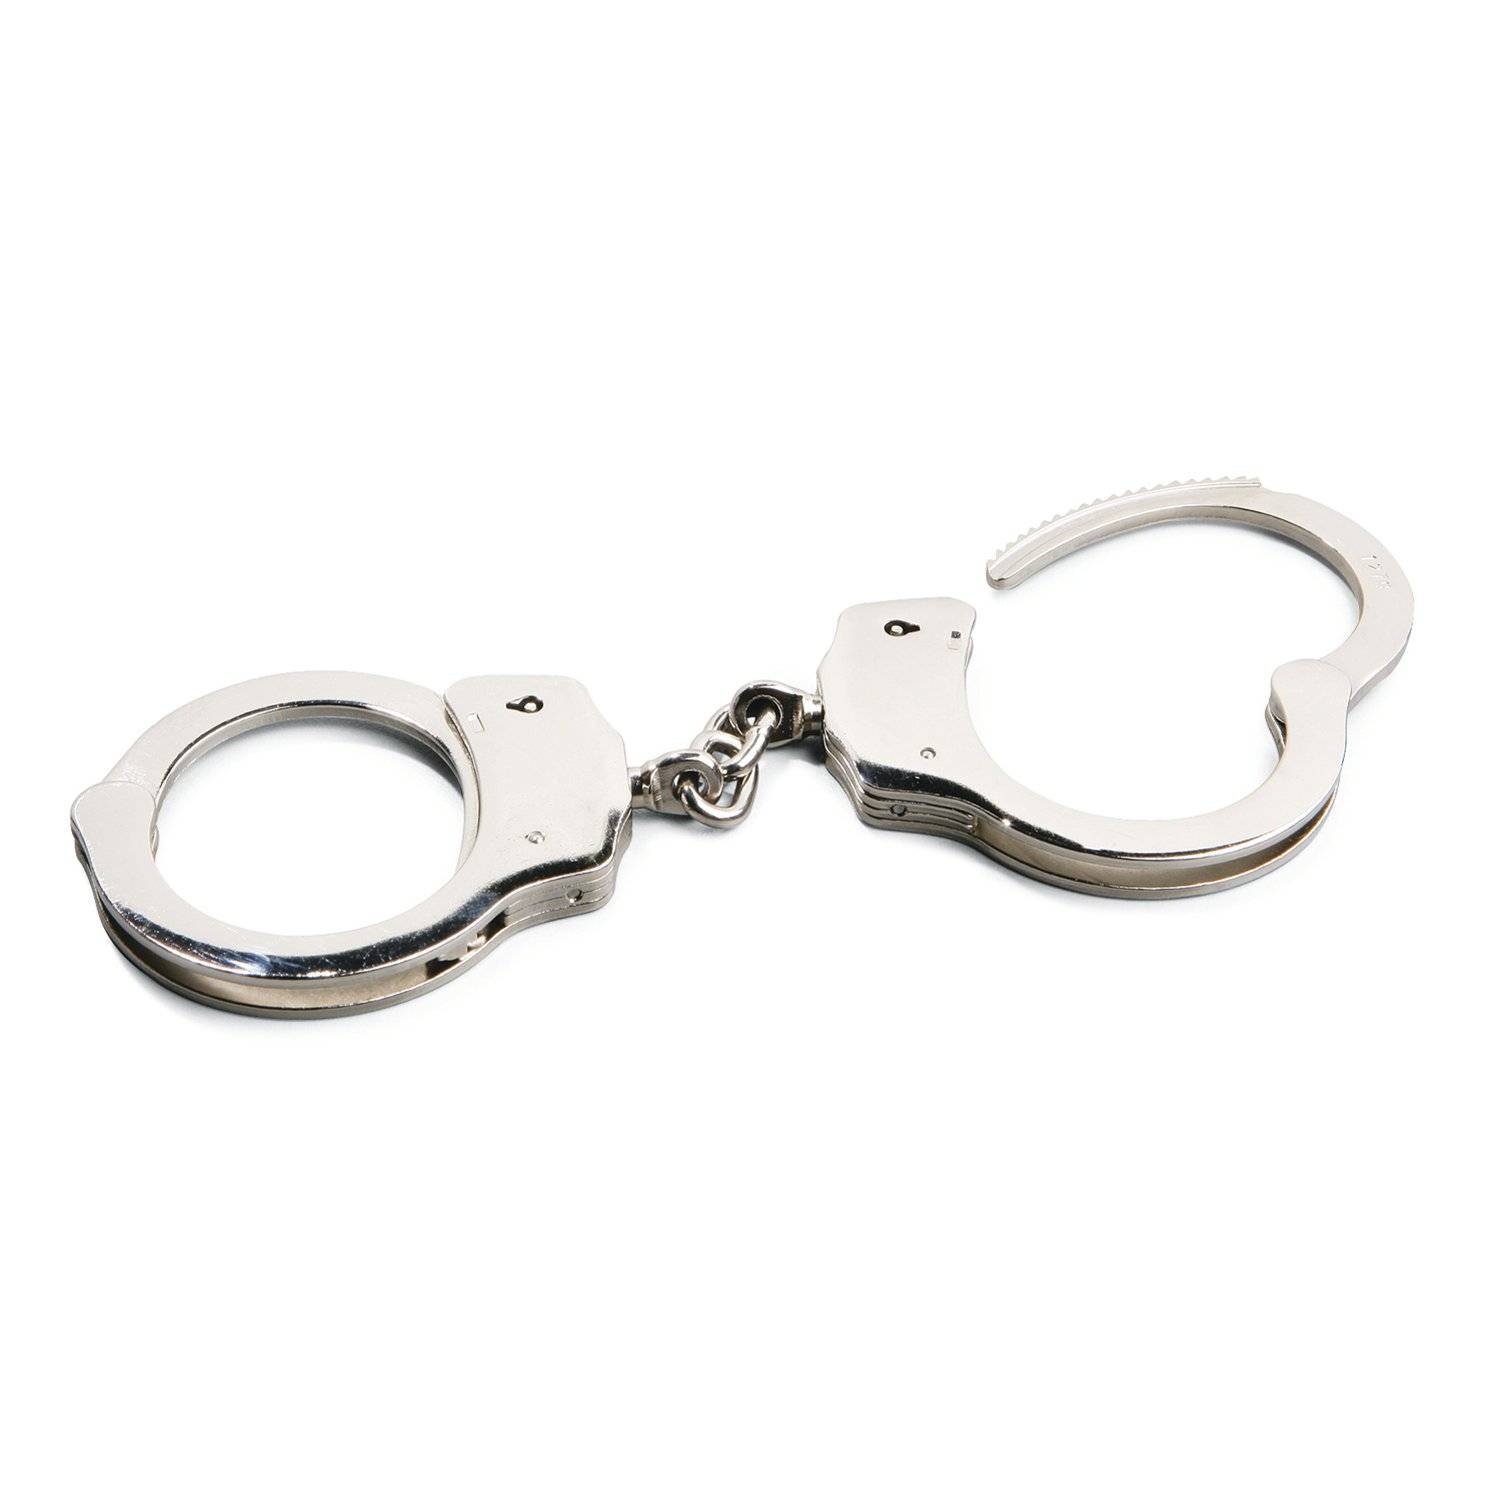 Galls Chain Handcuffs